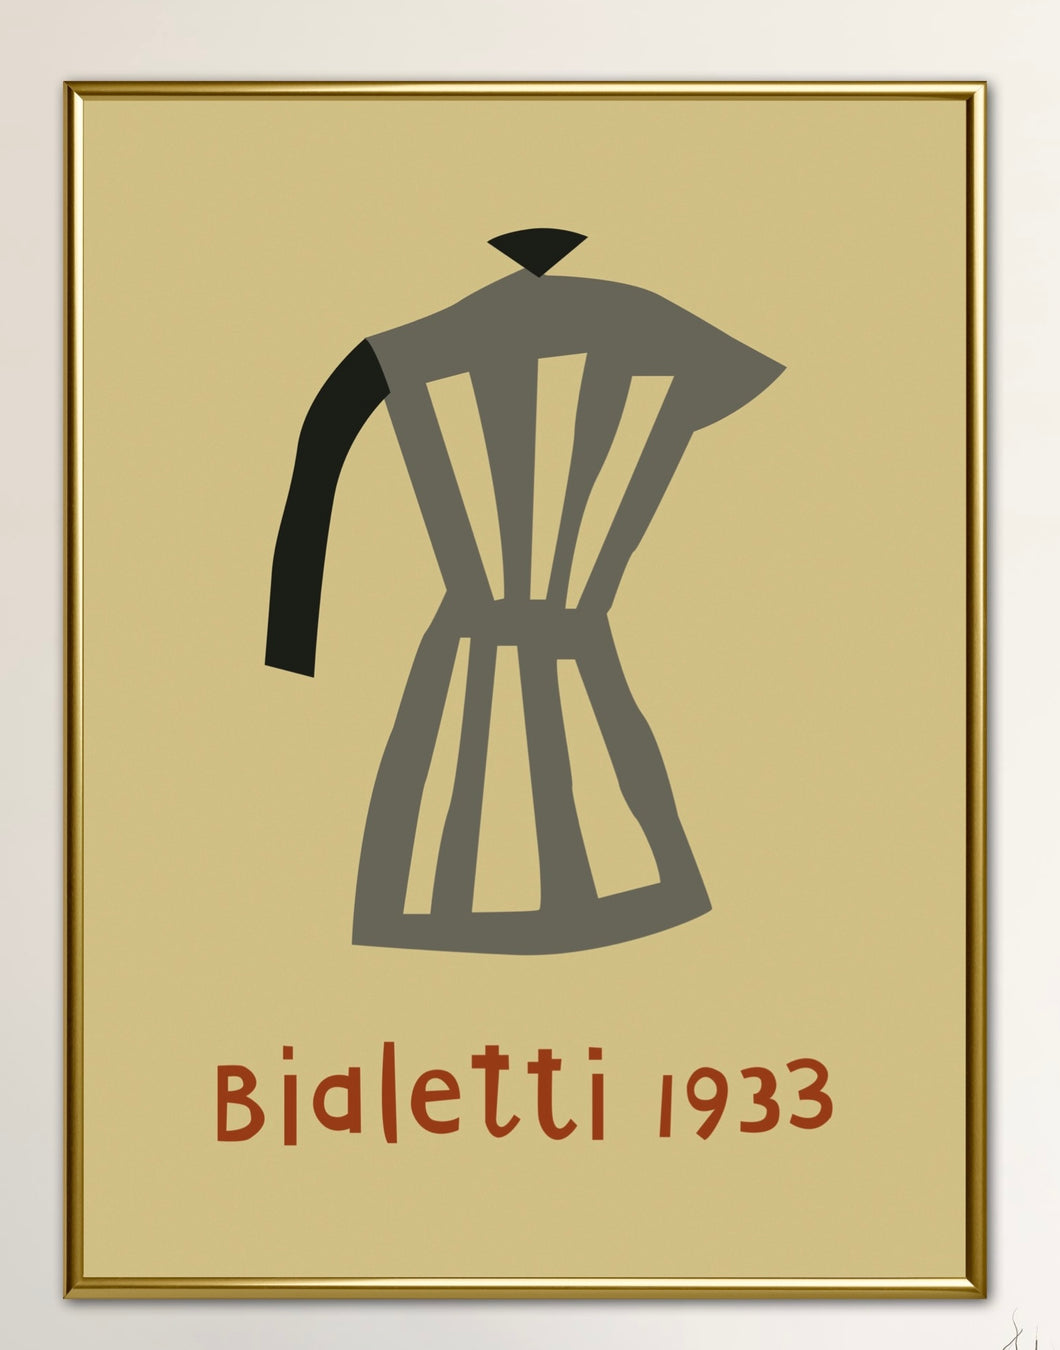 Italia Bidletti